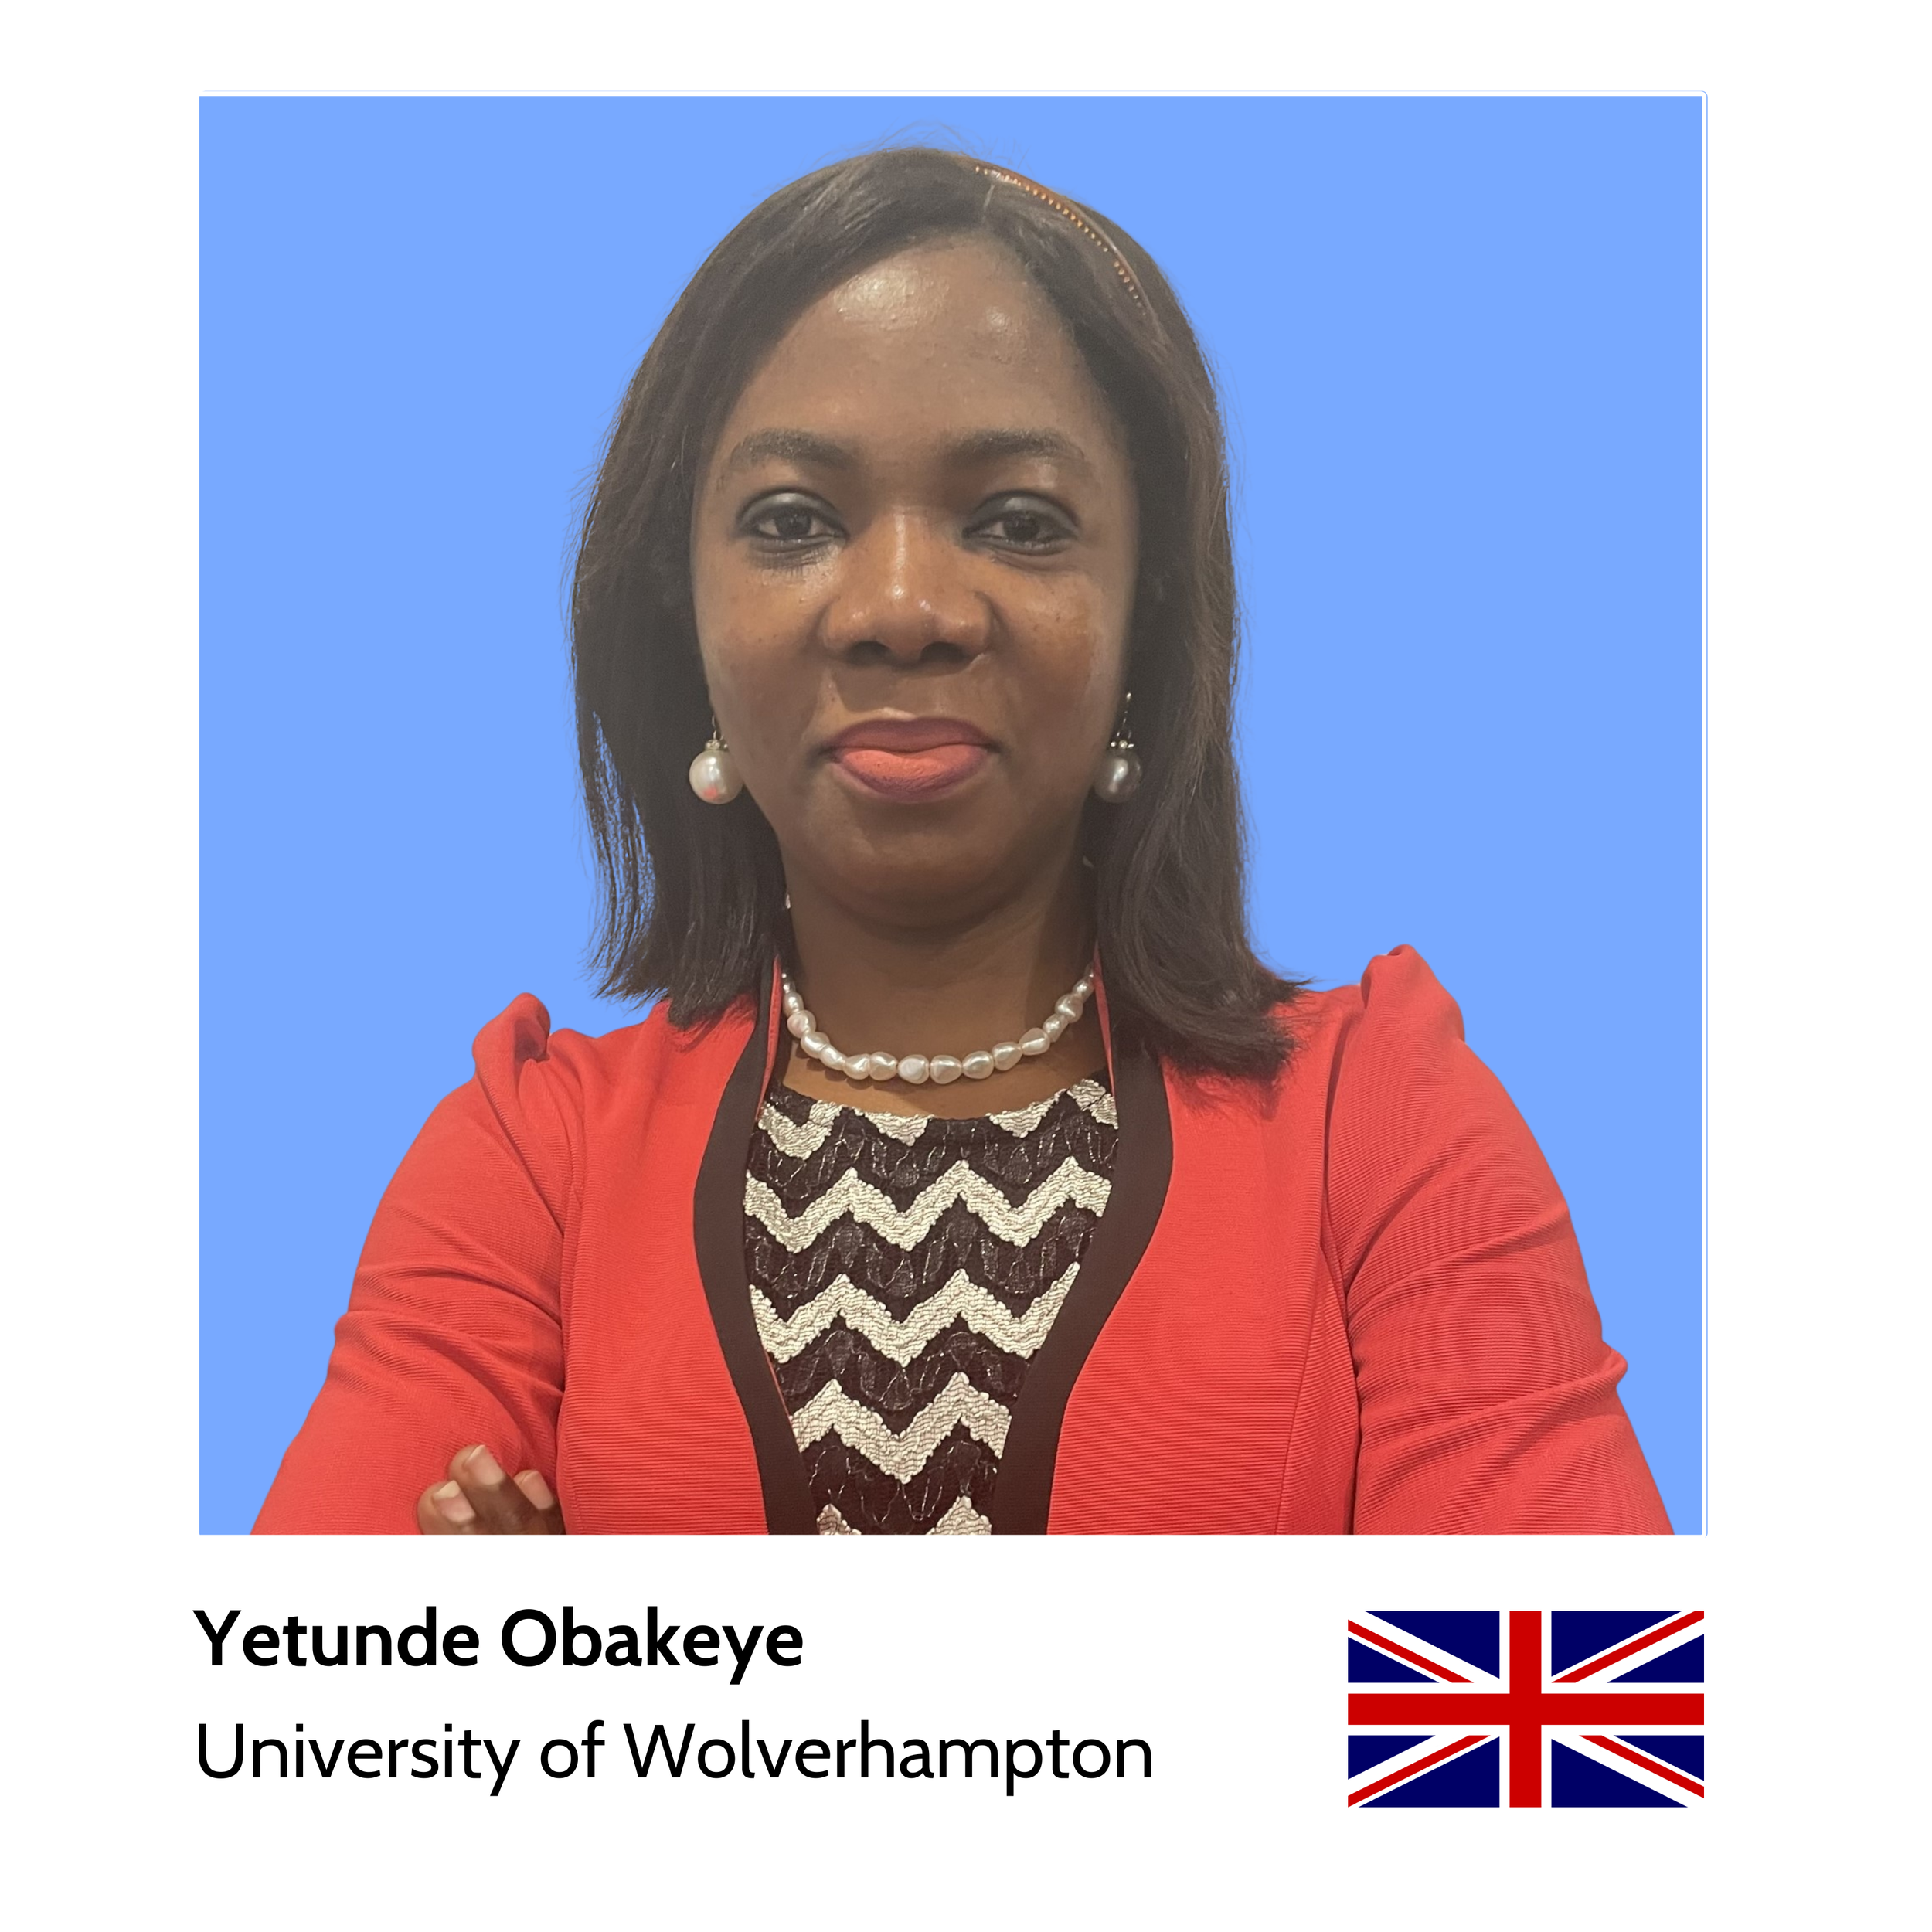 Your_Big_Year_ibm_z_student_ambassador_Yetunde Obakeye_University of Wolverhampton.png